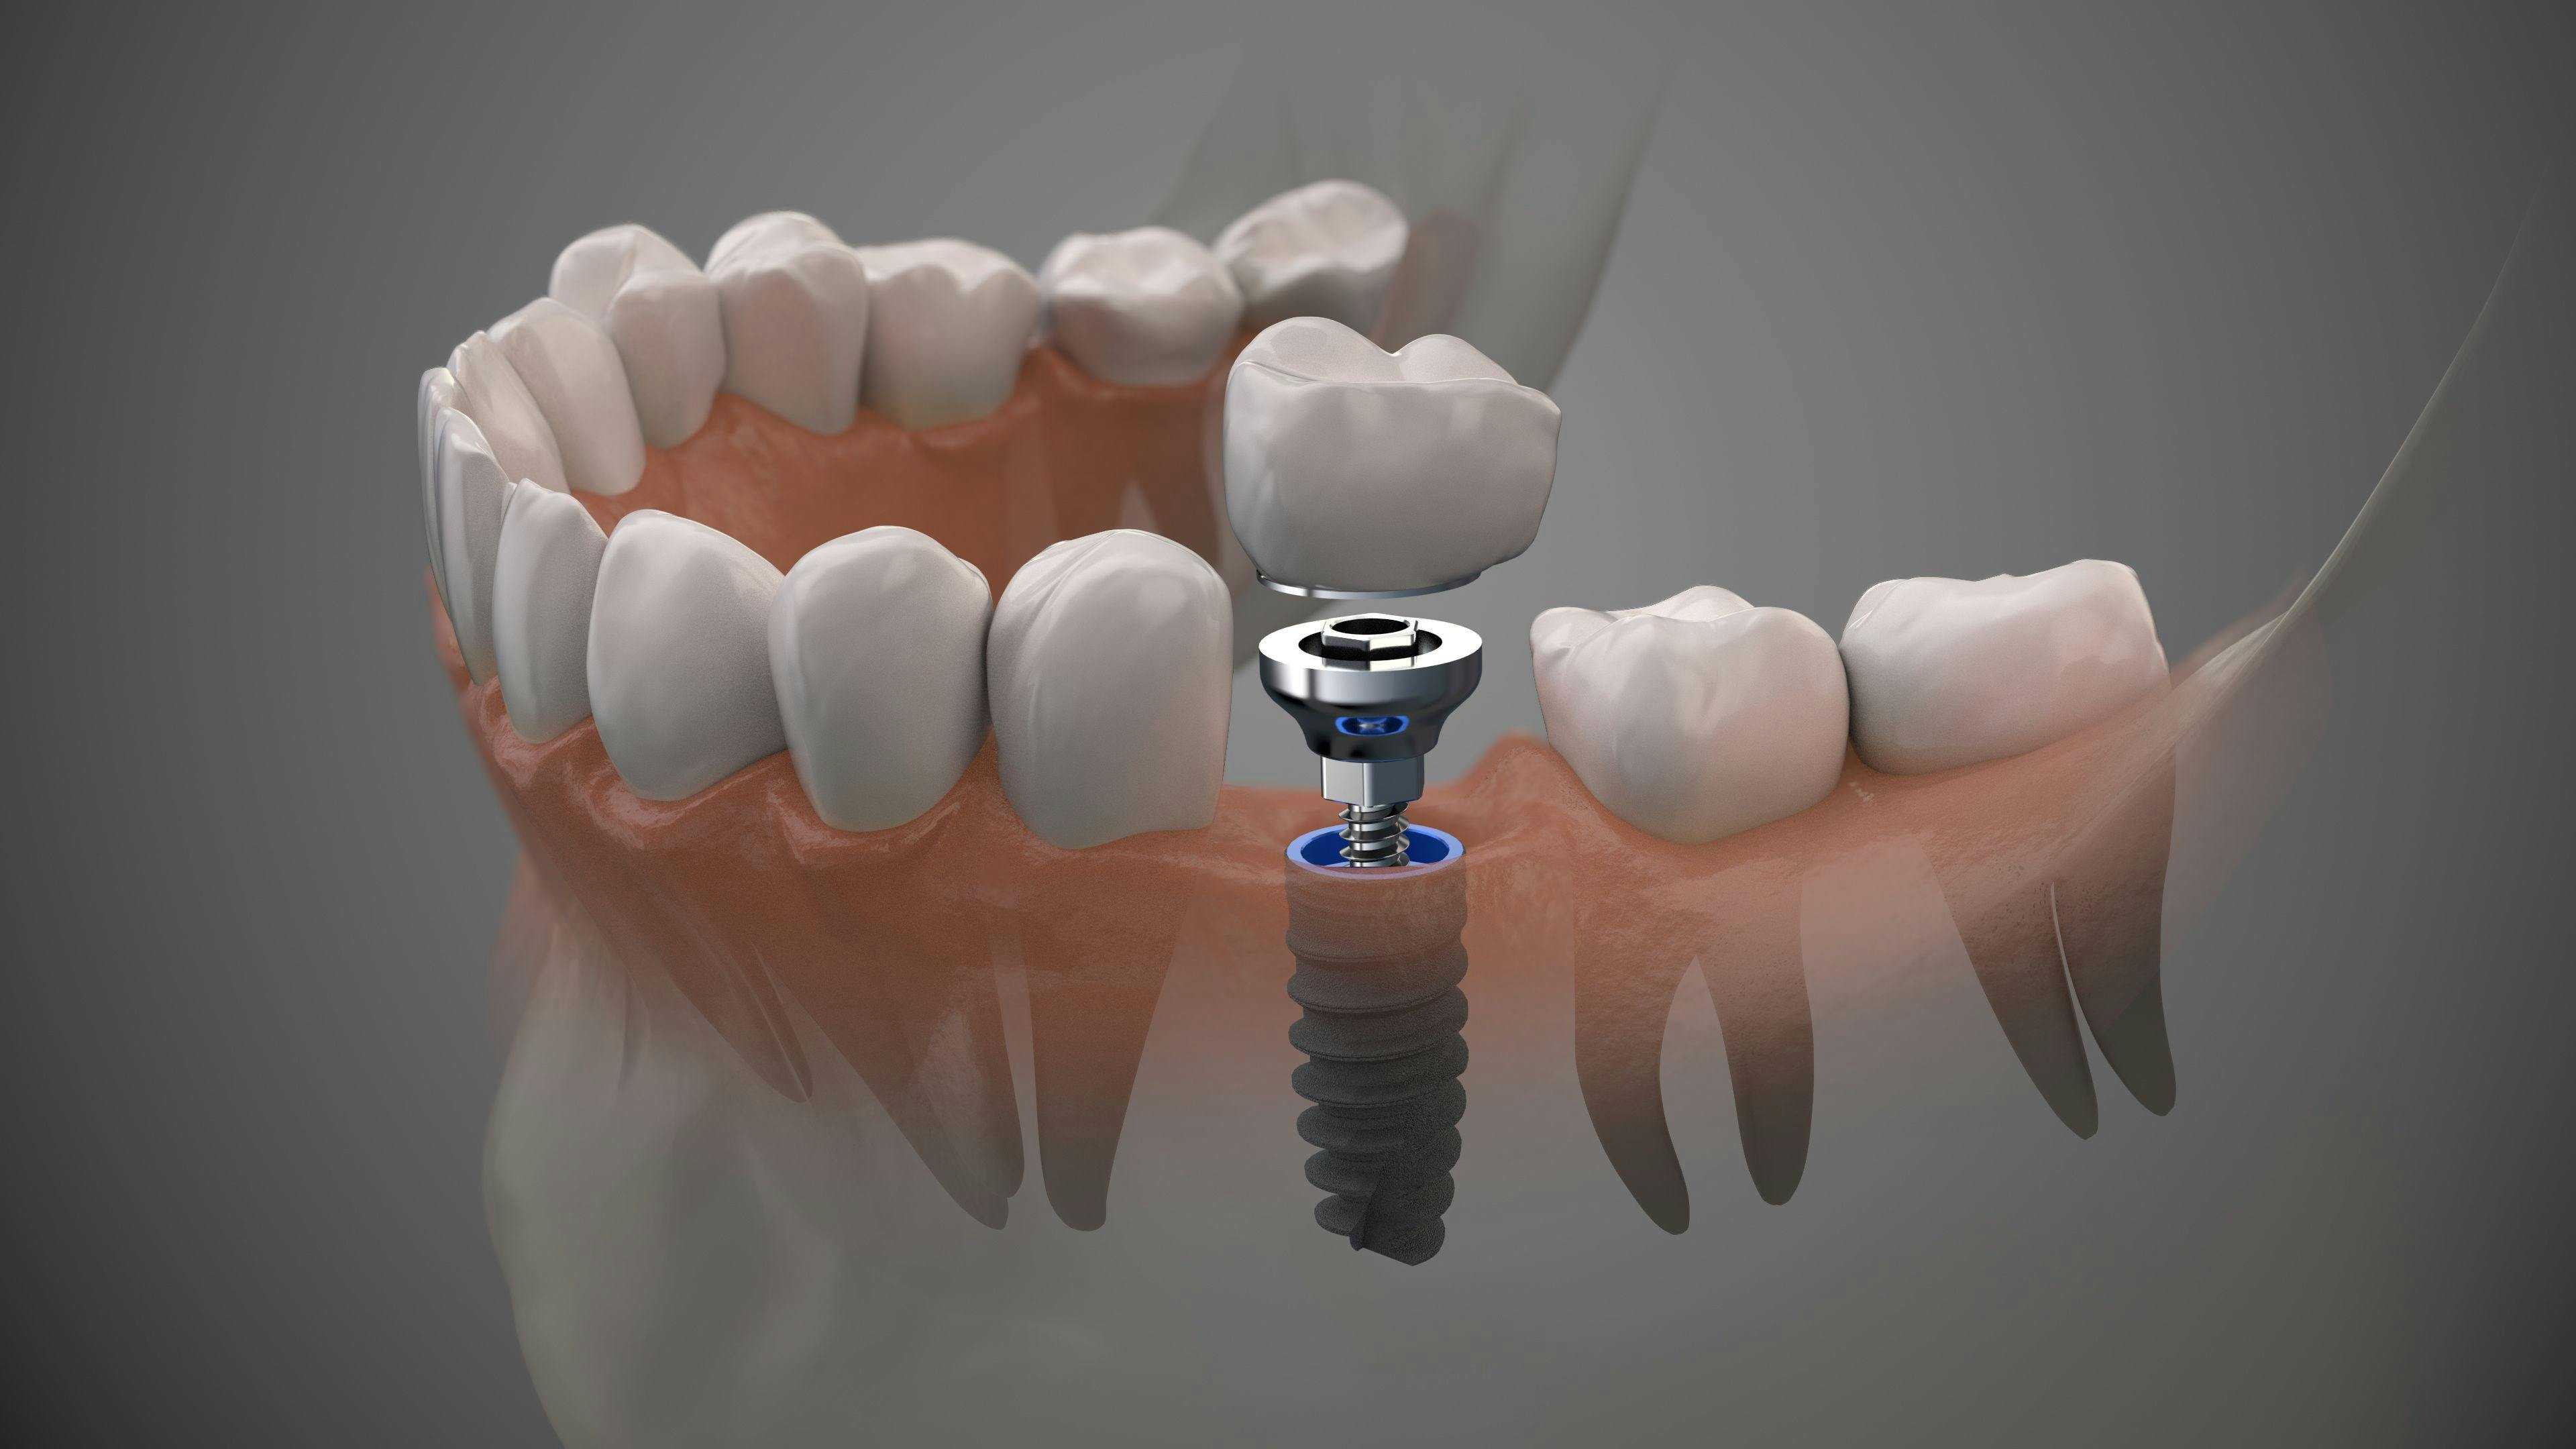 cement-retained dental implant – labden / stock.adobe.com